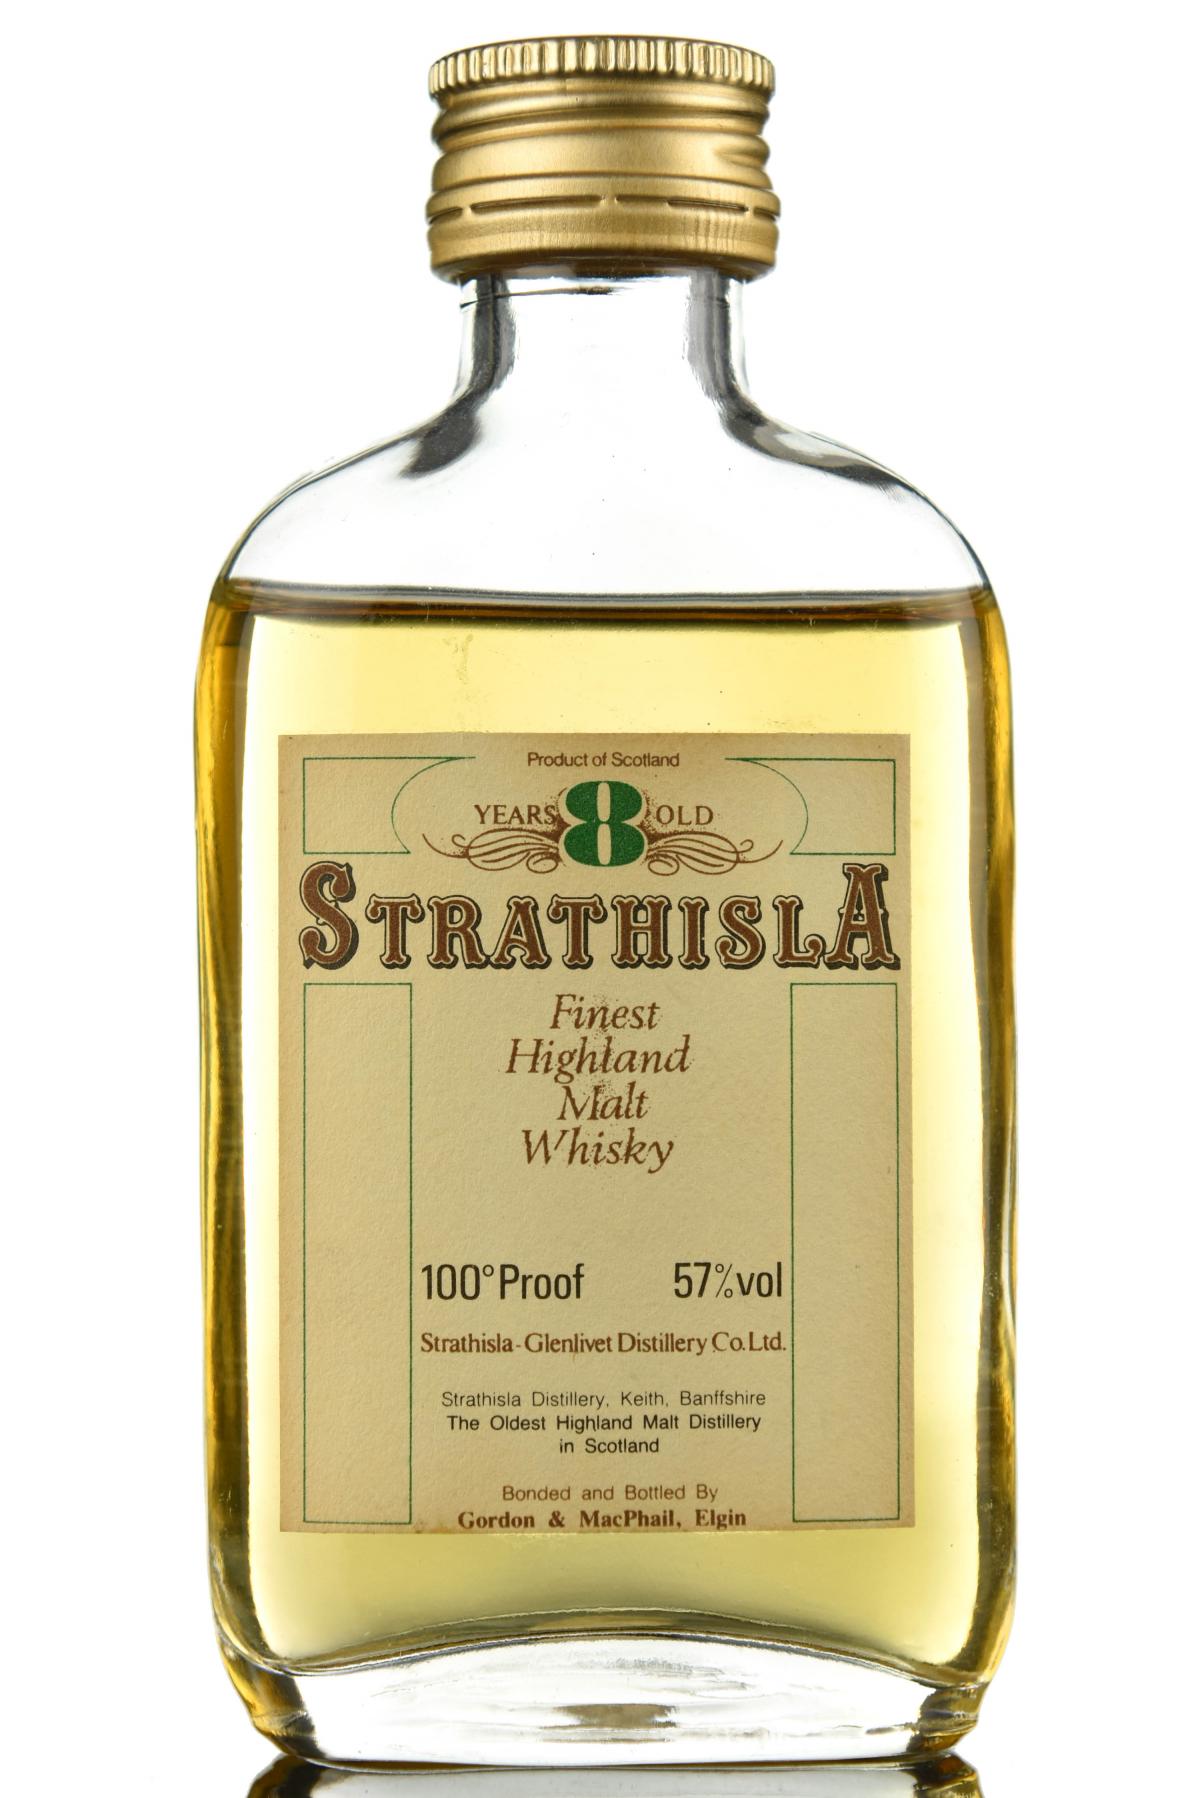 Strathisla 8 Year Old - 100 Proof - Gordon & MacPhail Miniature